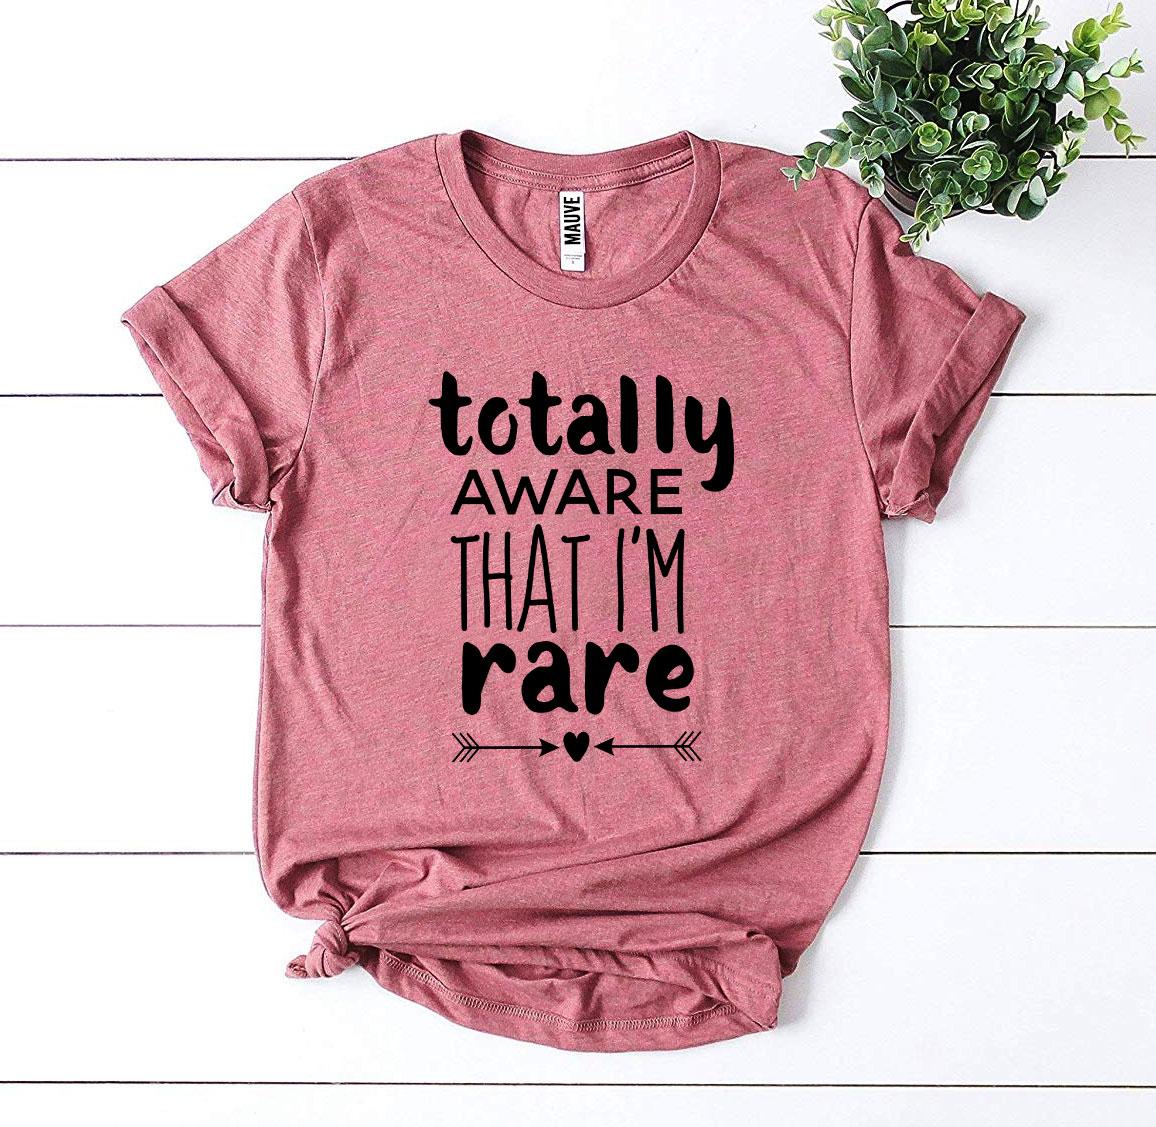 Totally Aware That I’m Rare T-shirt